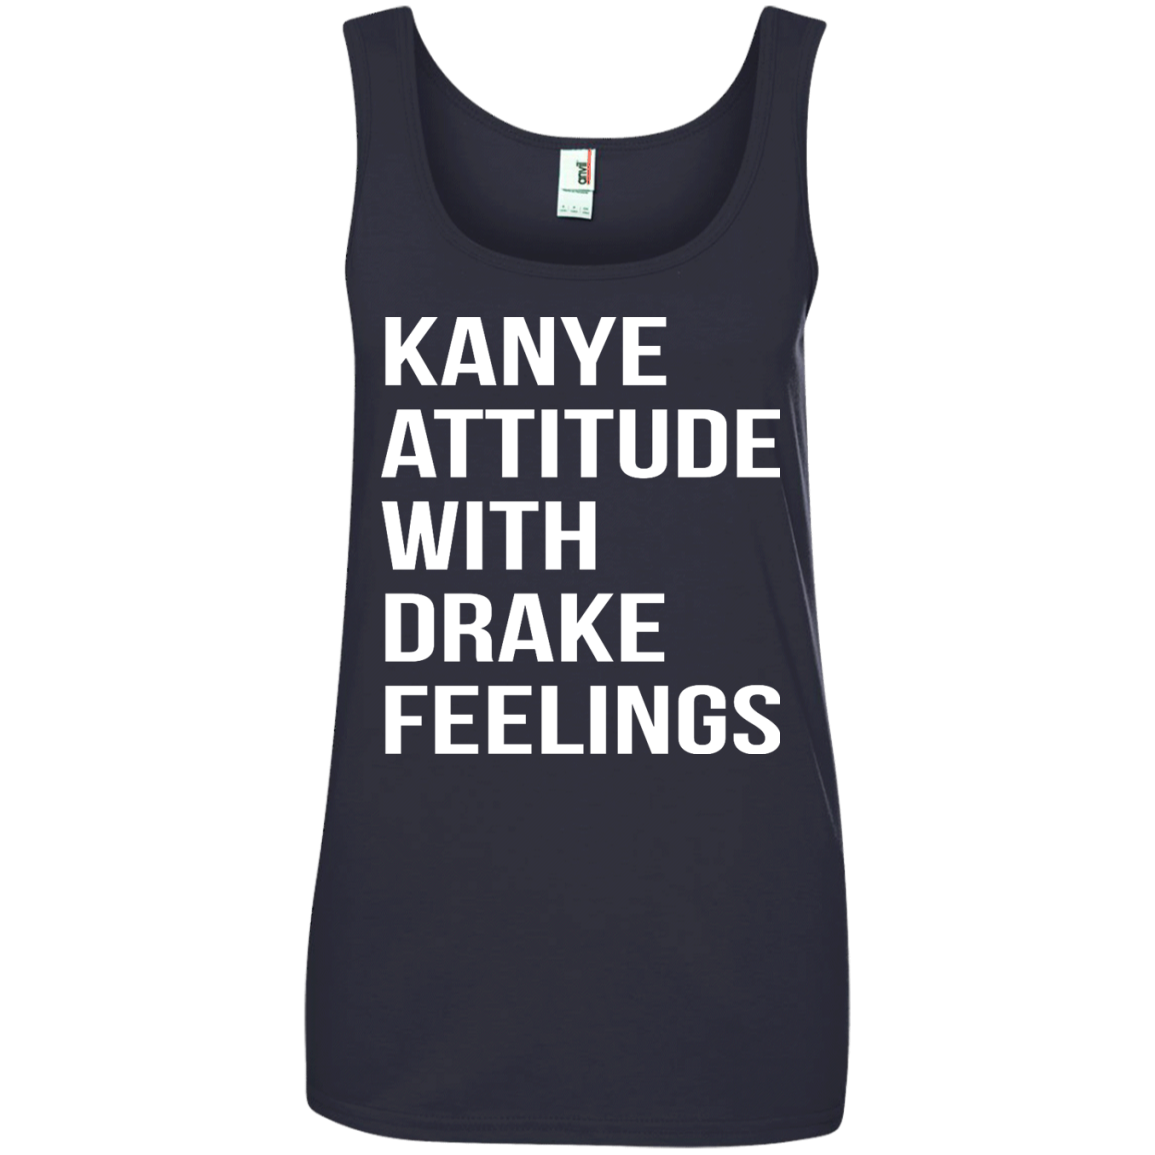 Kanye Attitude With Drake Feelings shirt, sweater, tank